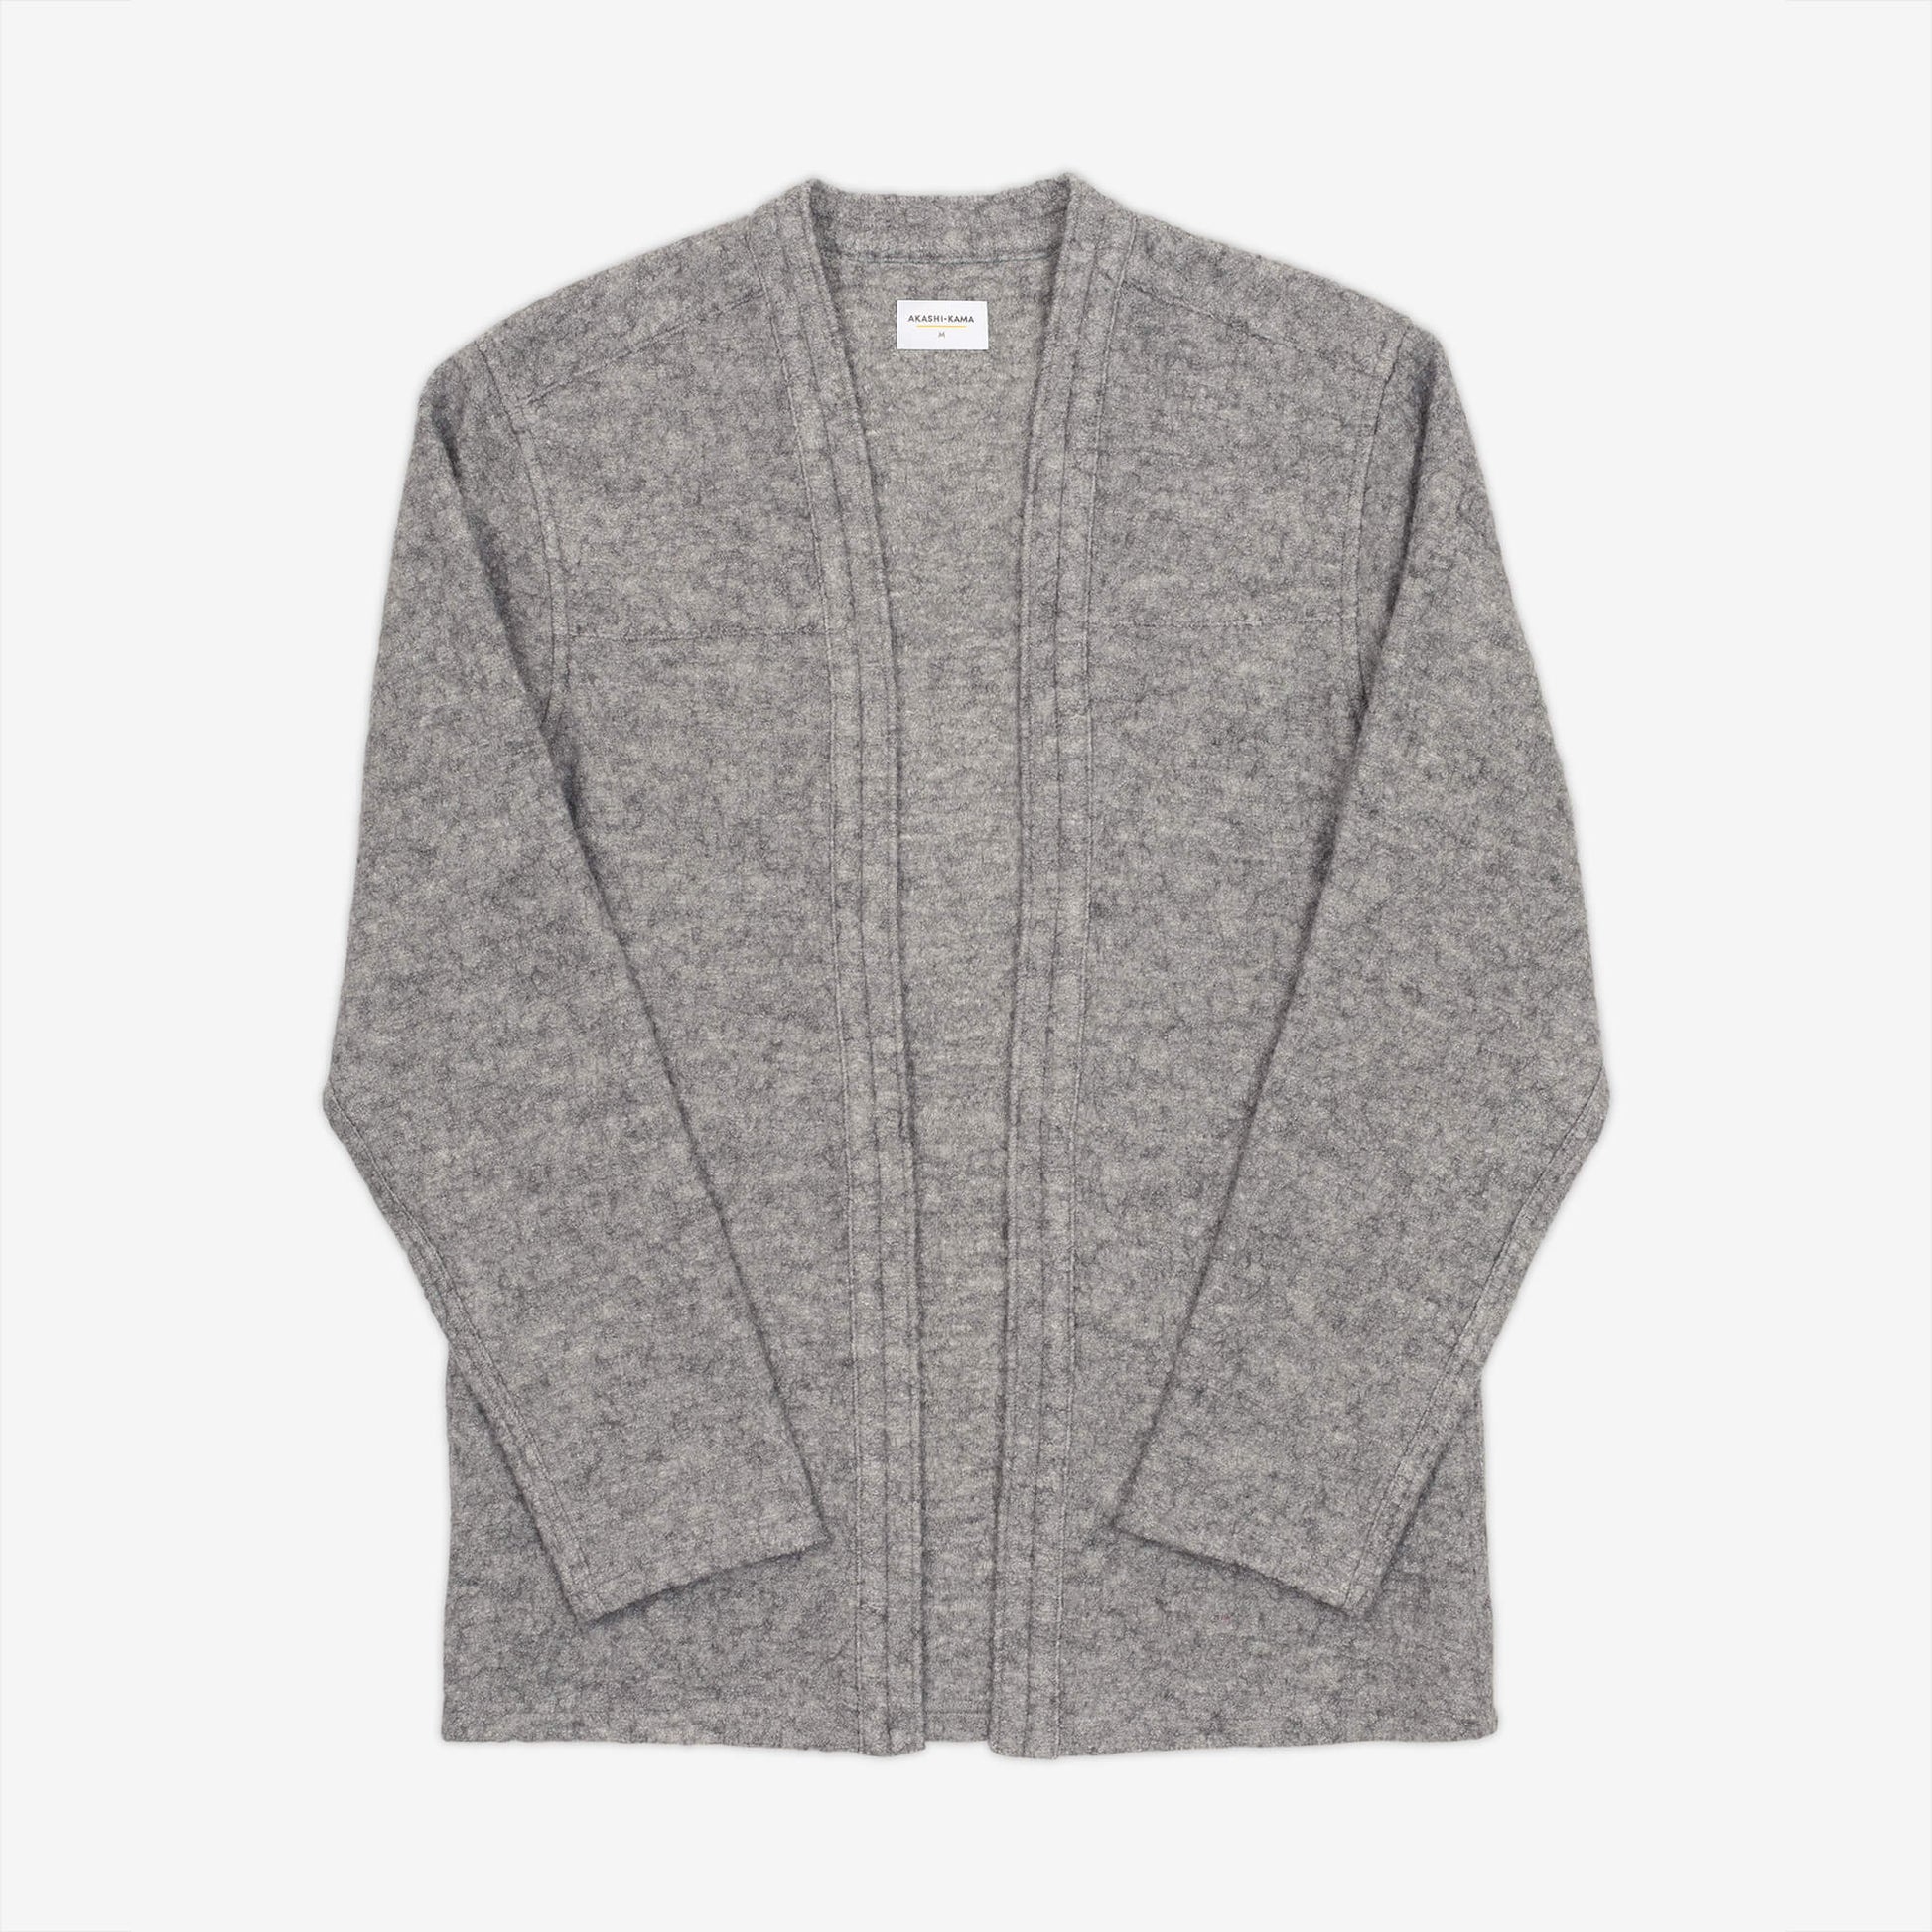 AKASHI-KAMA Wool Noragi Jacket in Grey | Japanese Streetwear Kimono Shirt